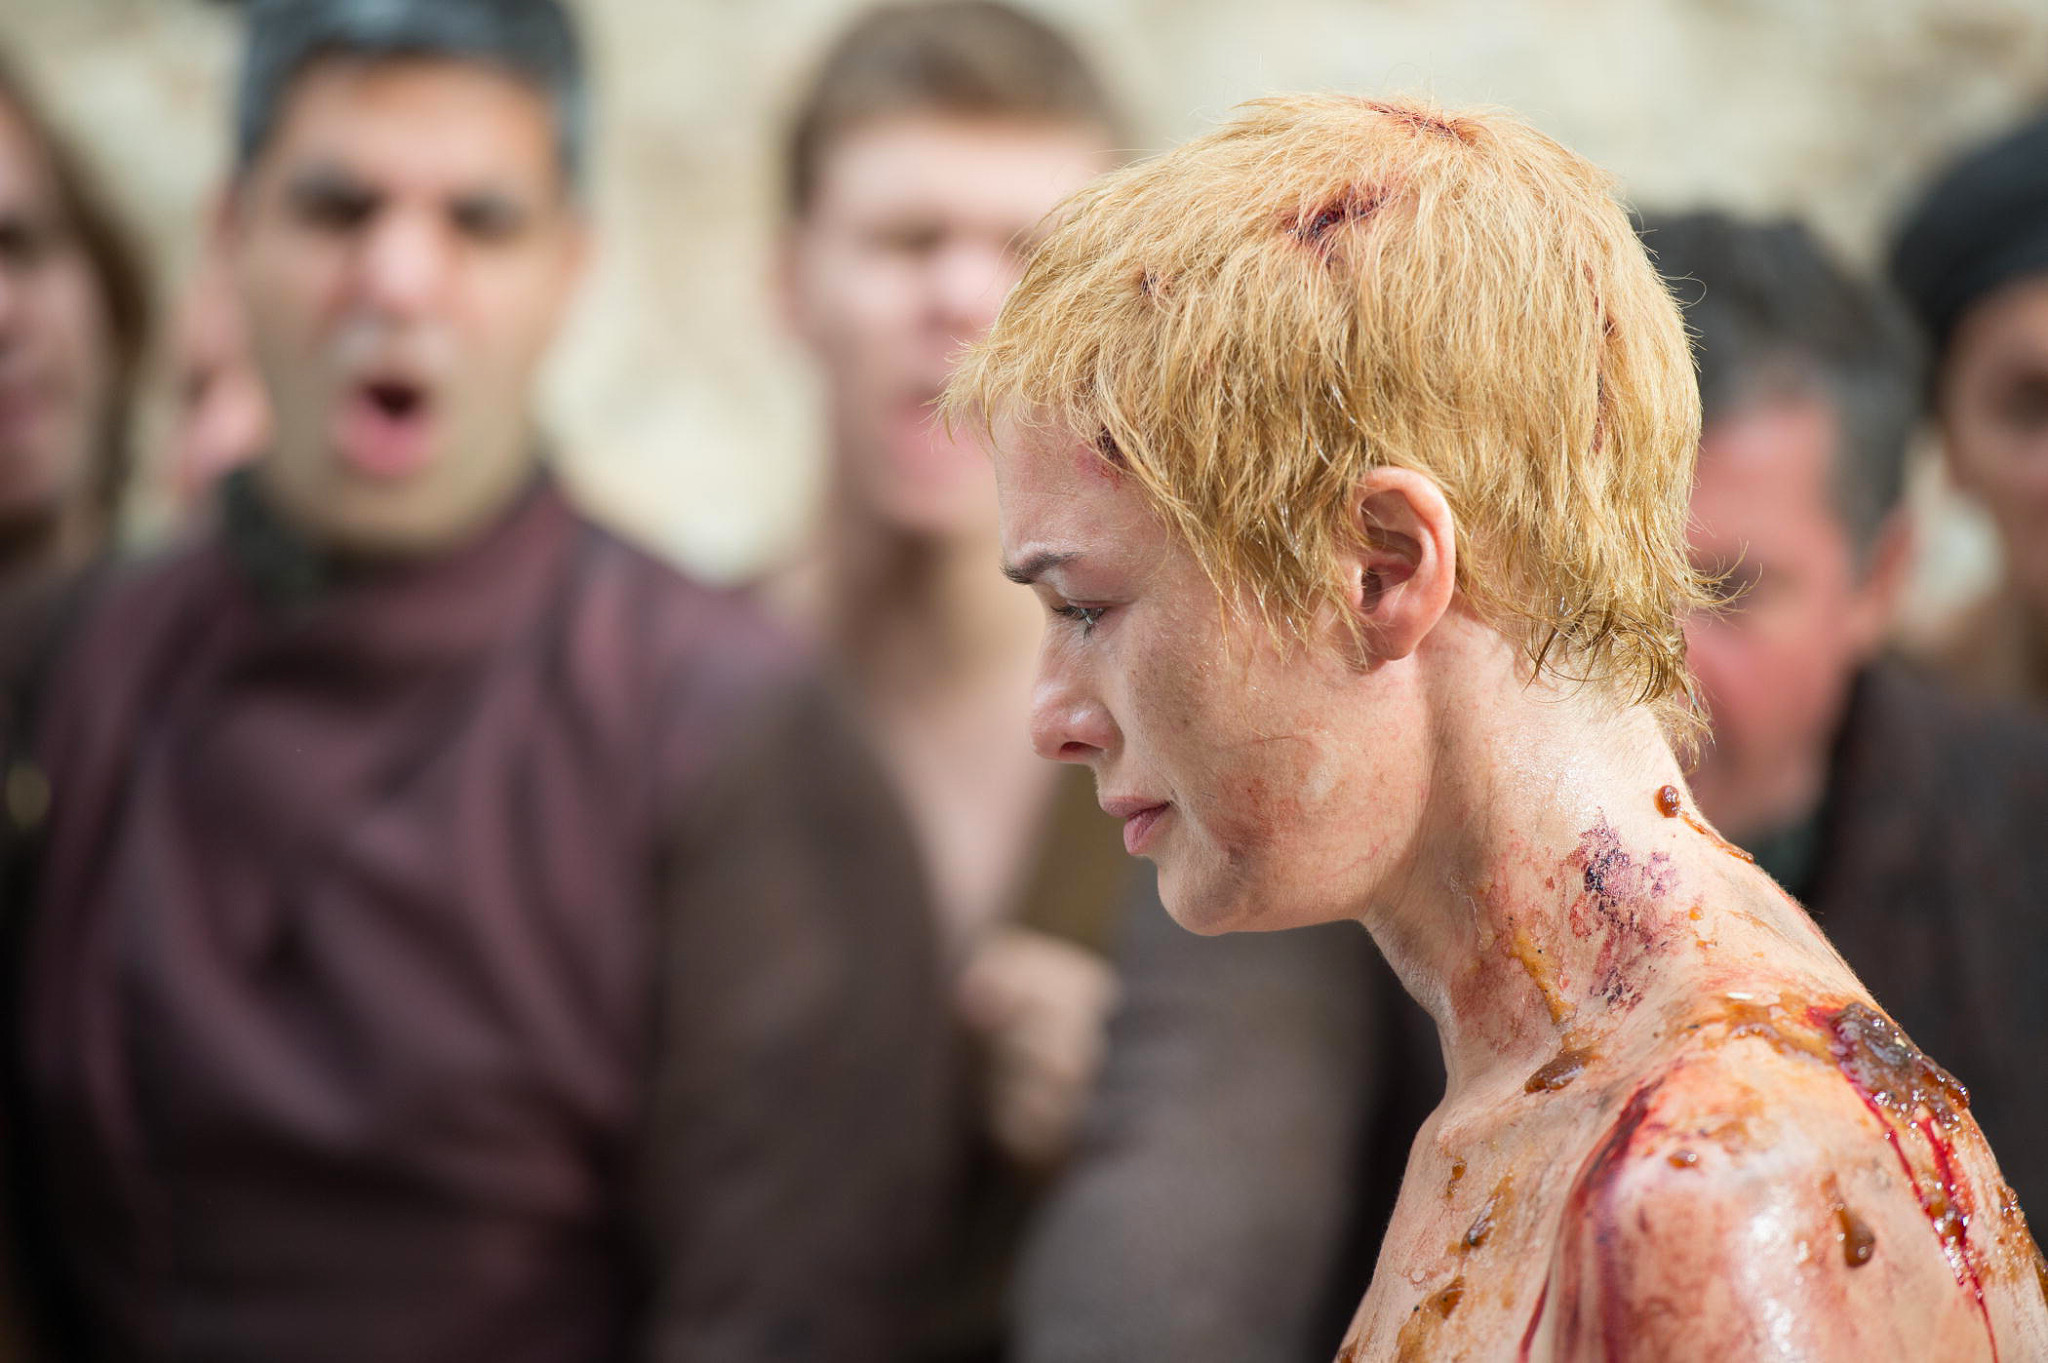 Game of Thrones - Lena Headey, Cersei Lannister